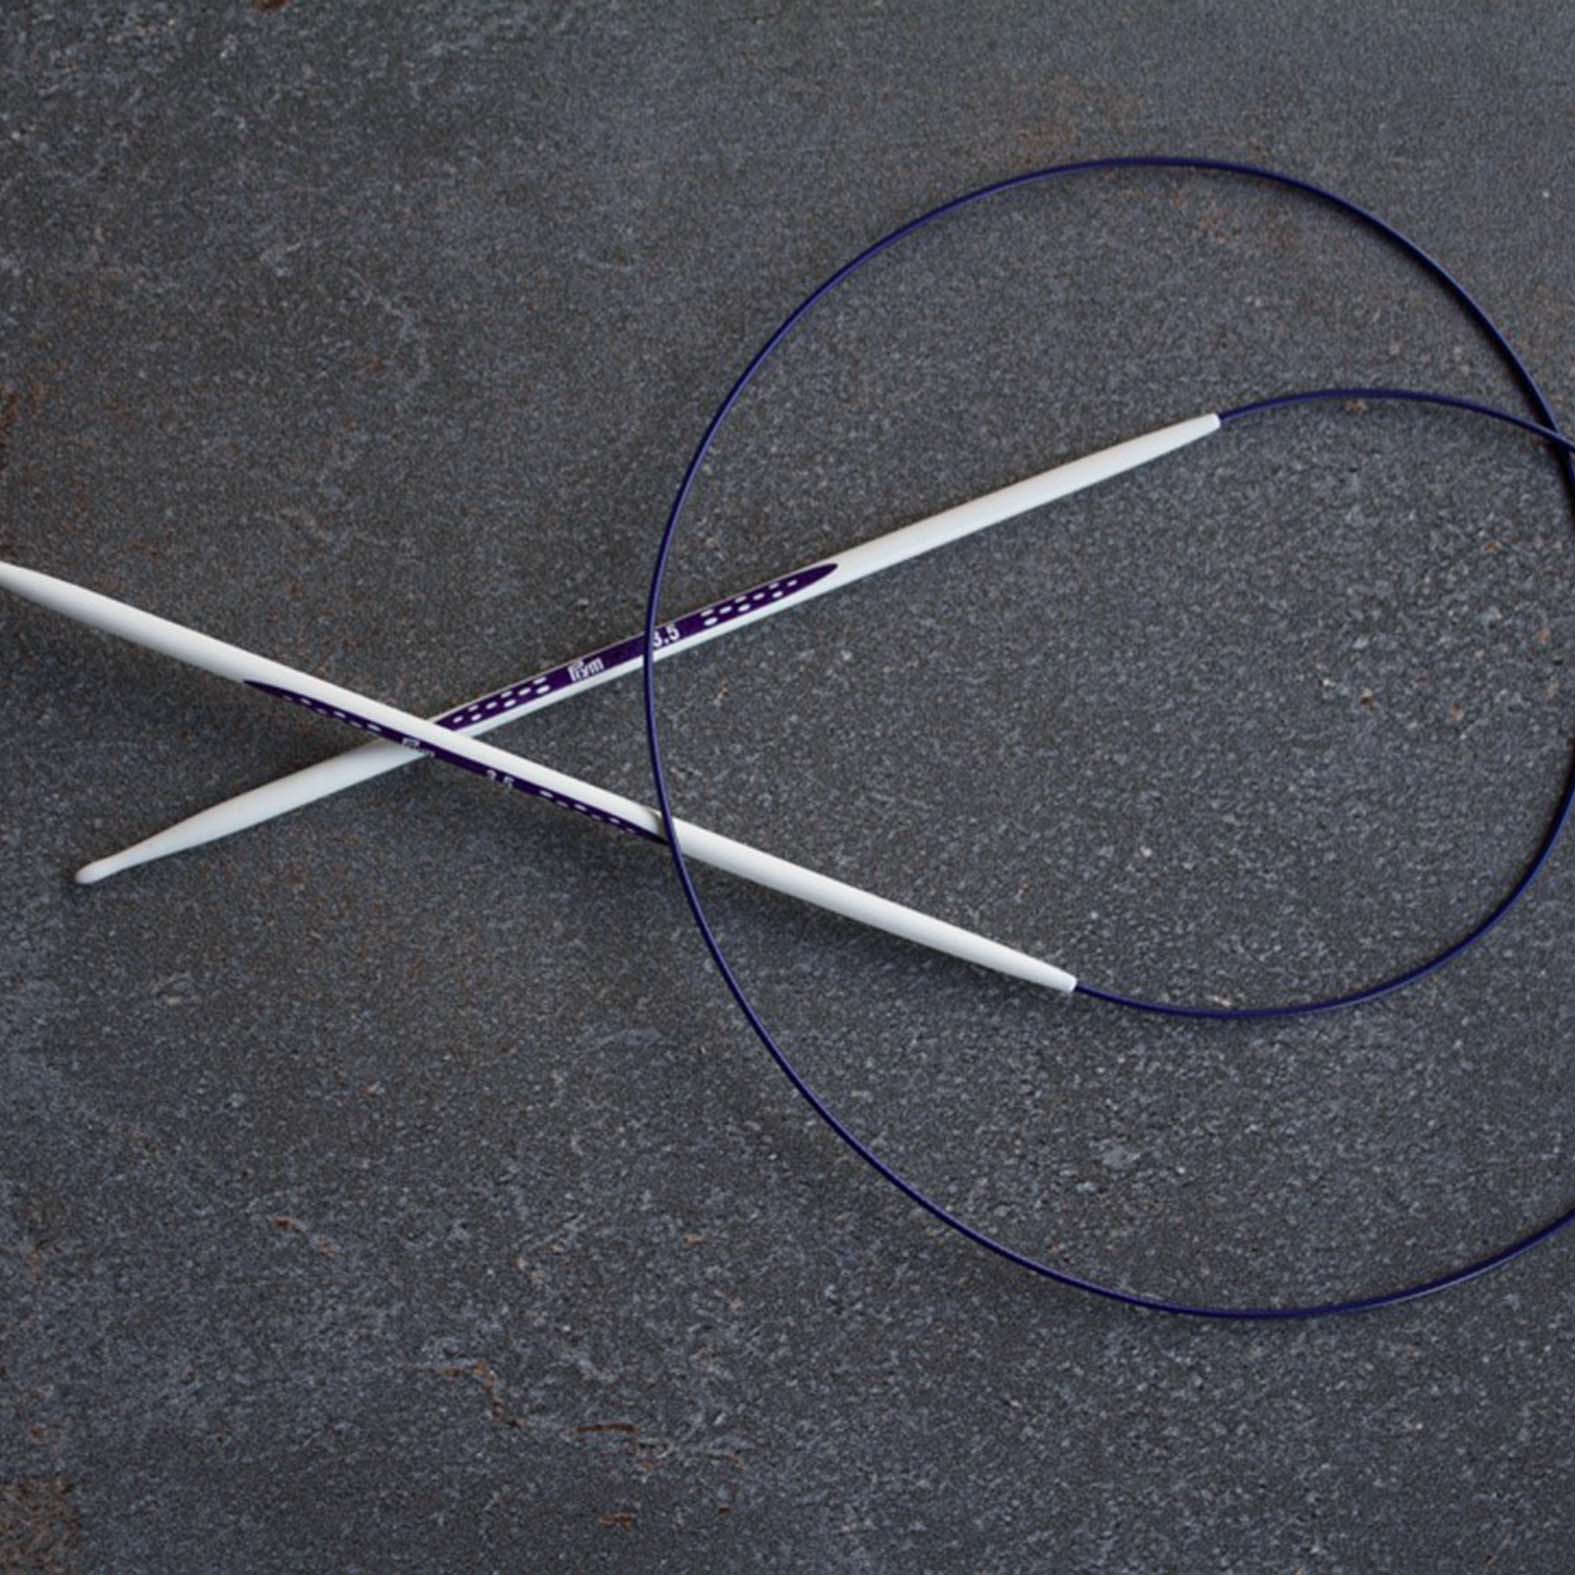 Prym Circular Knitting Needles - 24